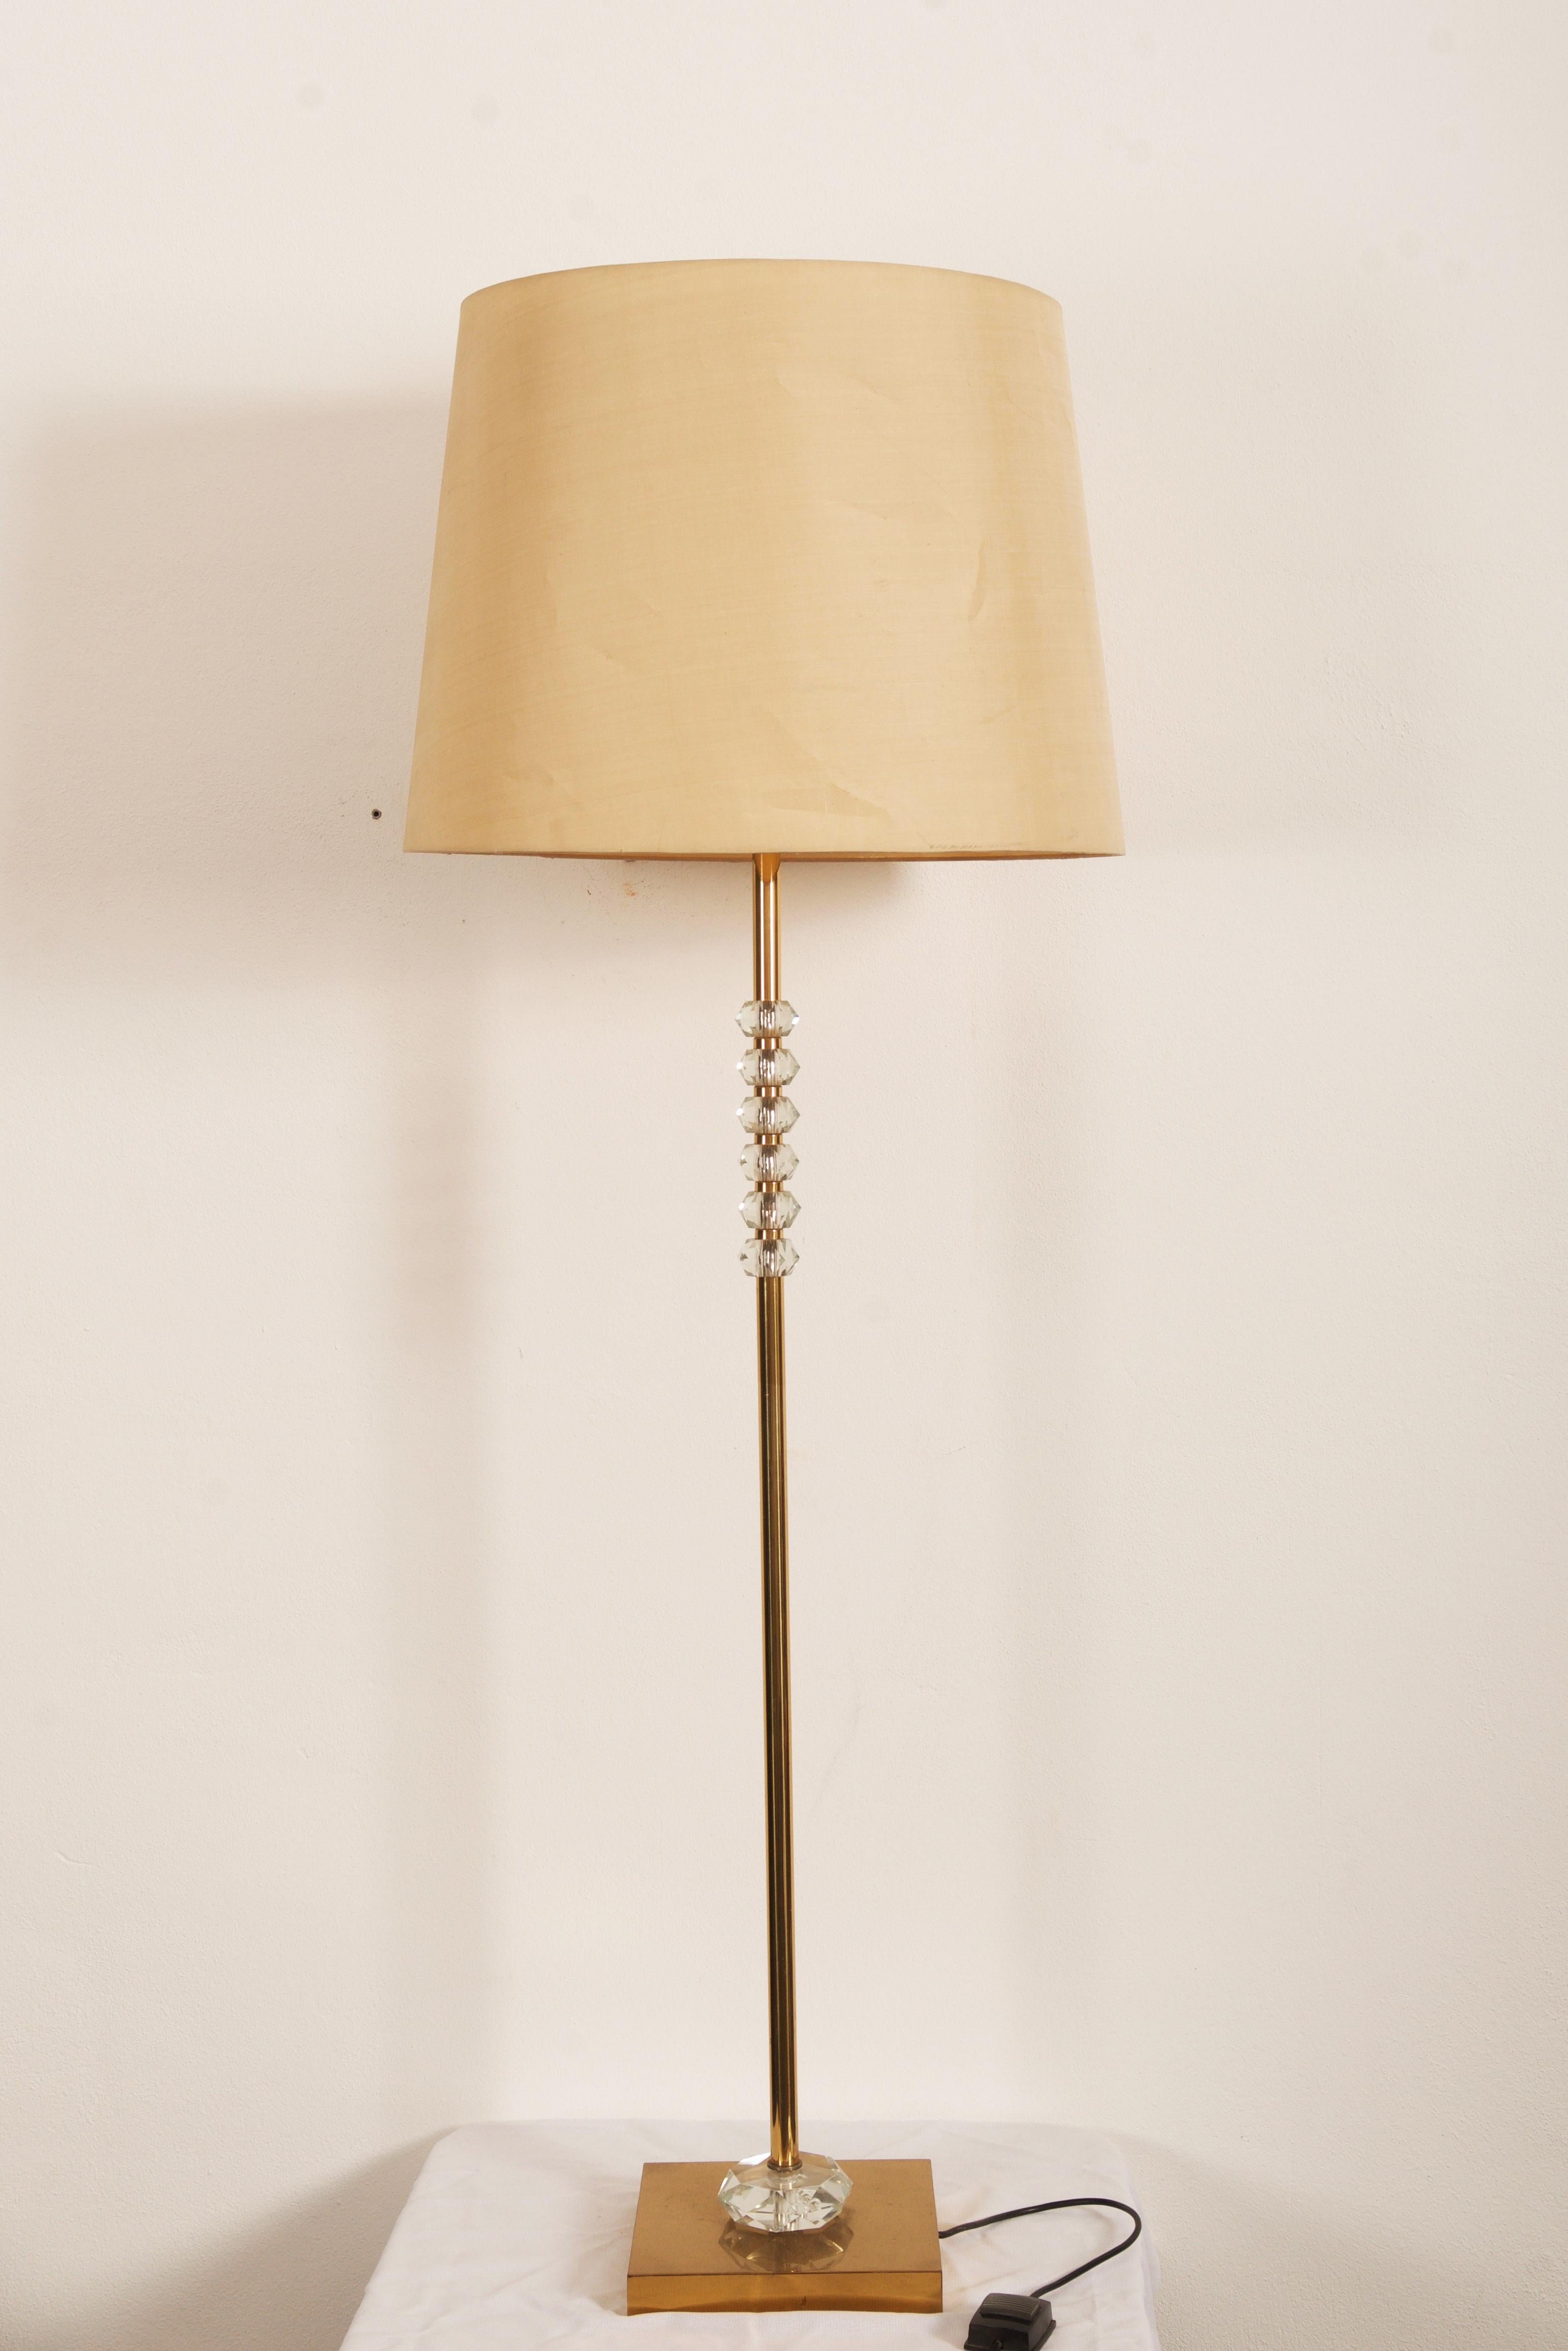 Brass Austrian Floor Lamp Attributed to Lobmeyr For Sale